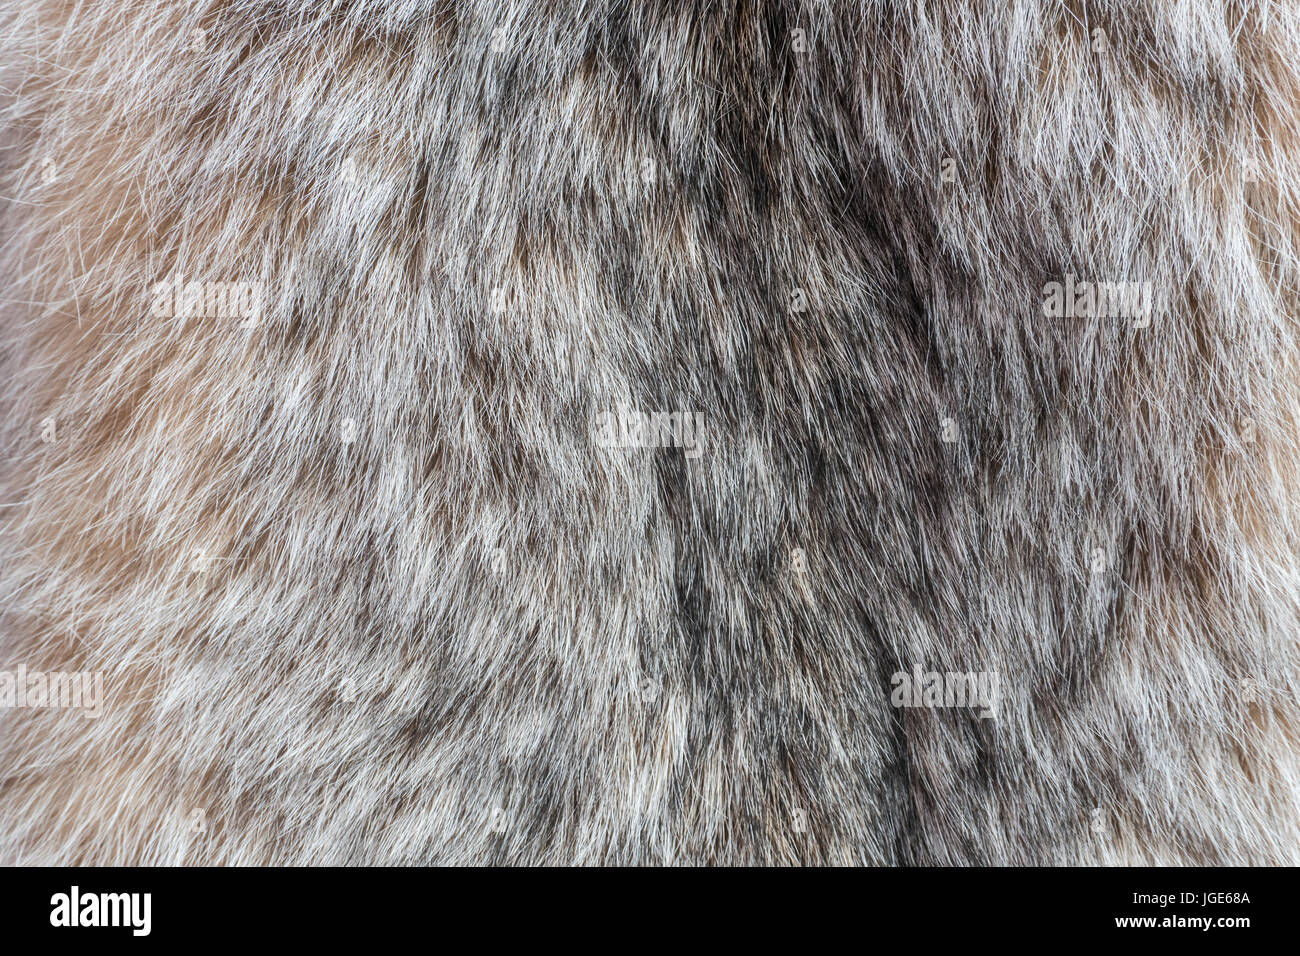 Canada Lynx fur. Fur of lynx close up texture. Stock Photo